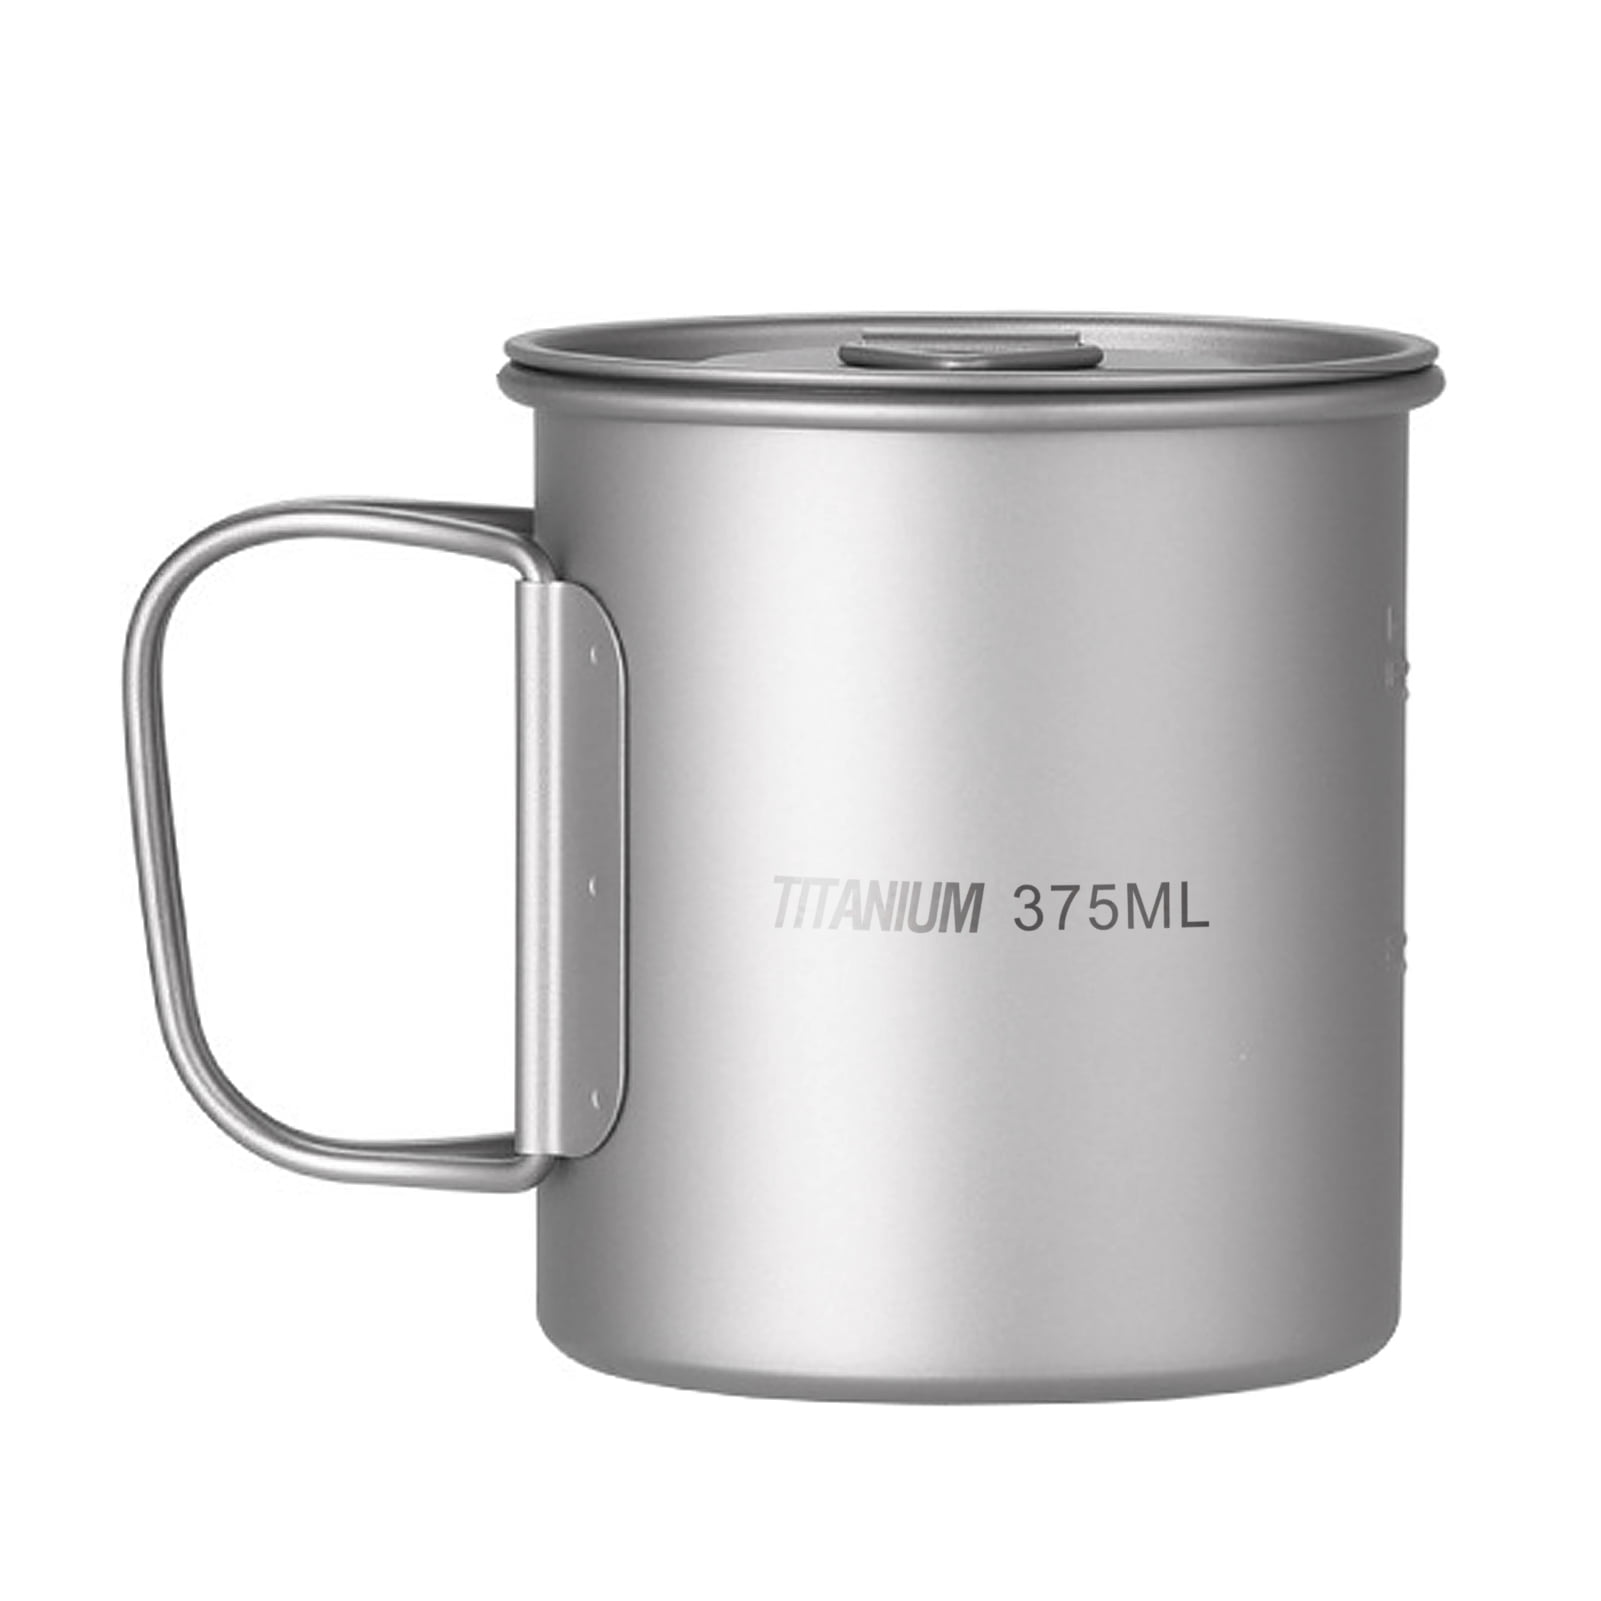 Outdoor Camping Titanium Cup Portable Ultralight Picnic Water Tea Coffee Mug Pot